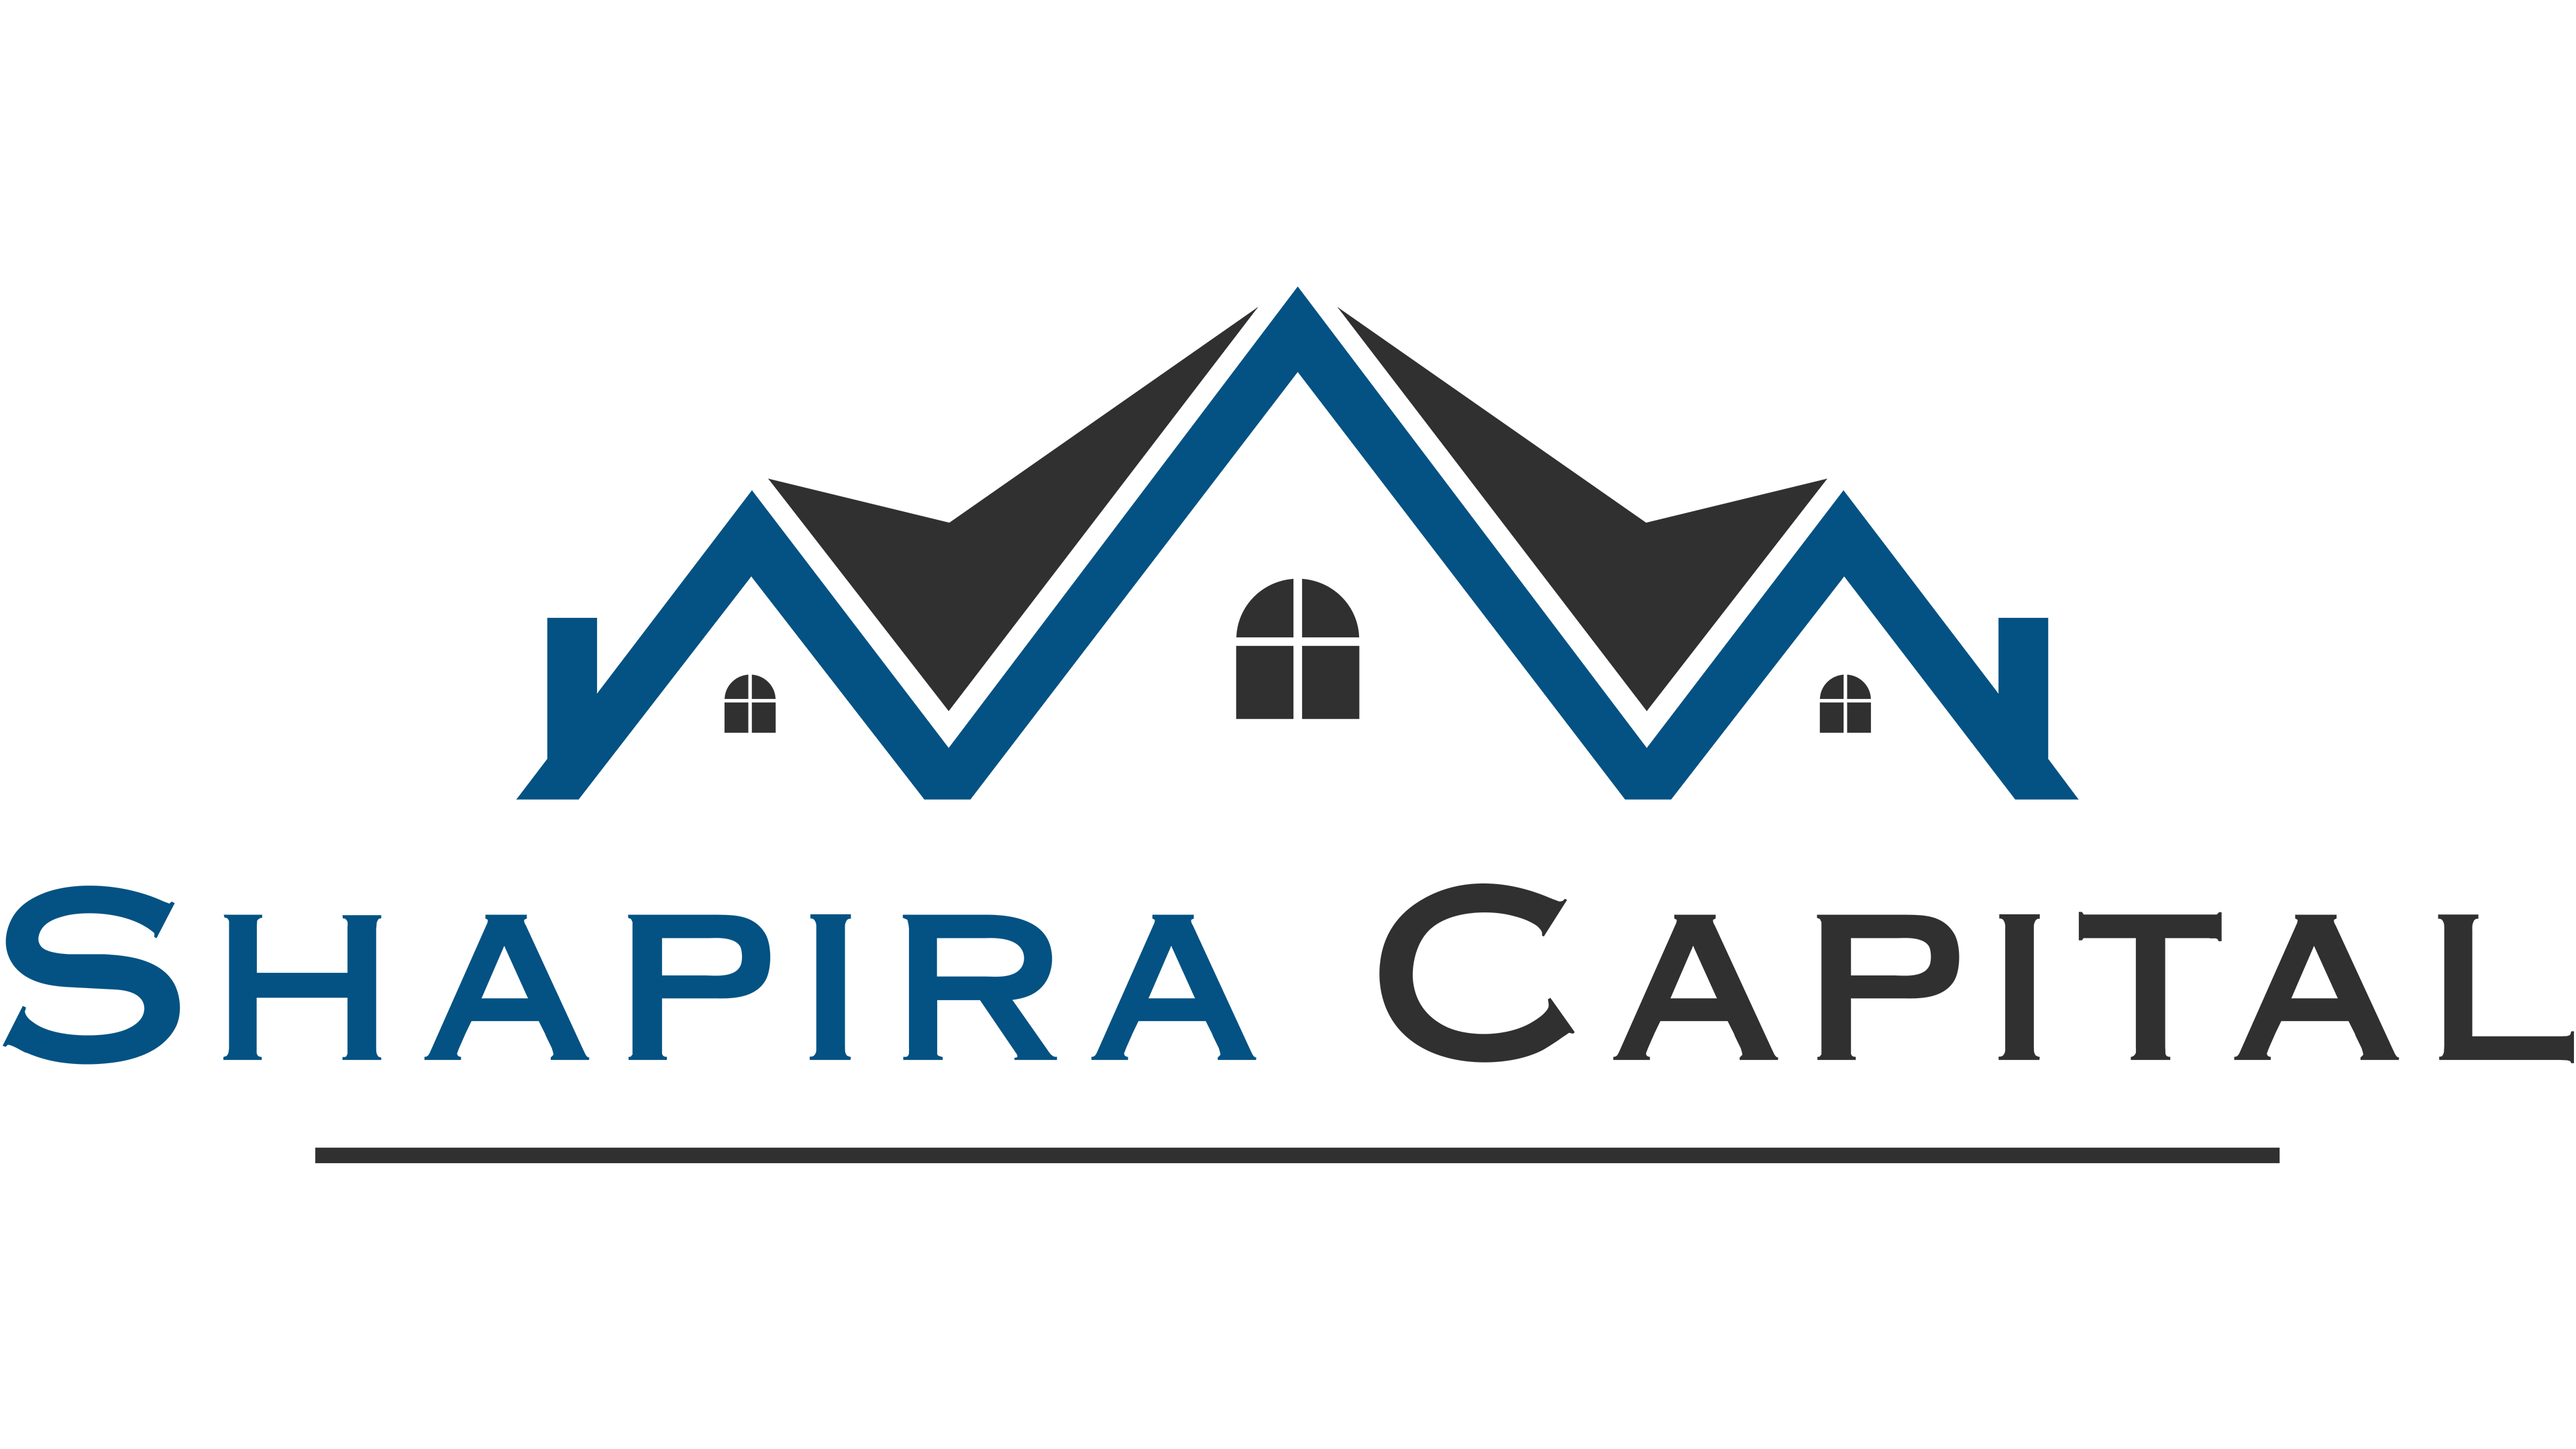 Shapira Capital